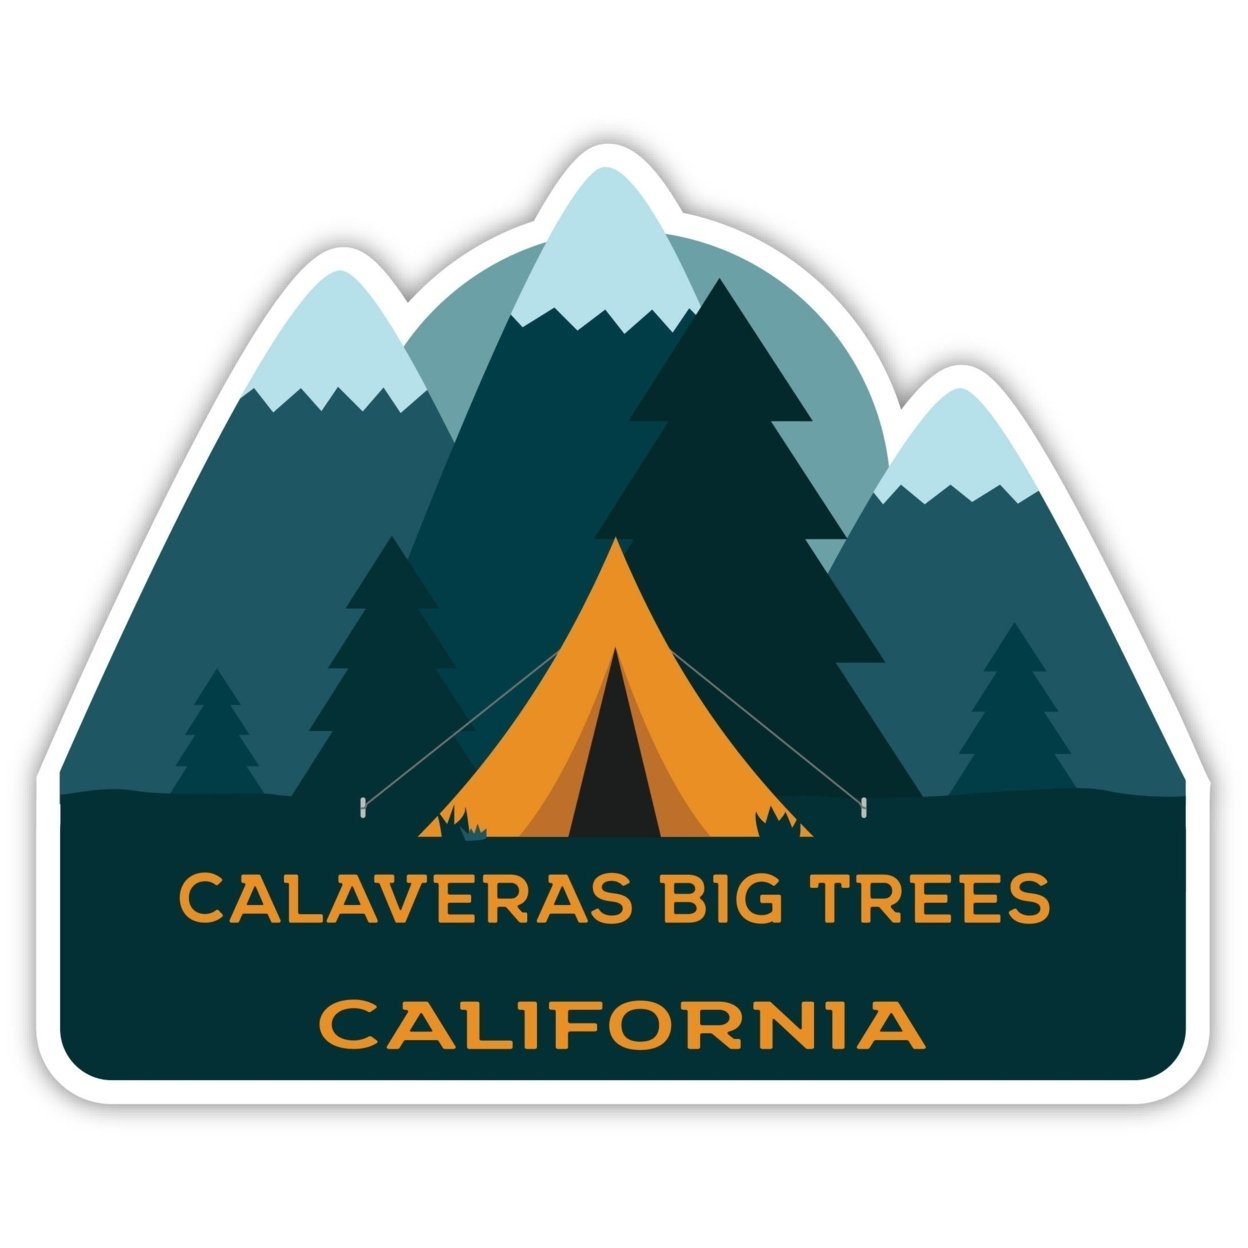 Calaveras Big Trees California Souvenir Decorative Stickers (Choose Theme And Size) - Single Unit, 2-Inch, Adventures Awaits